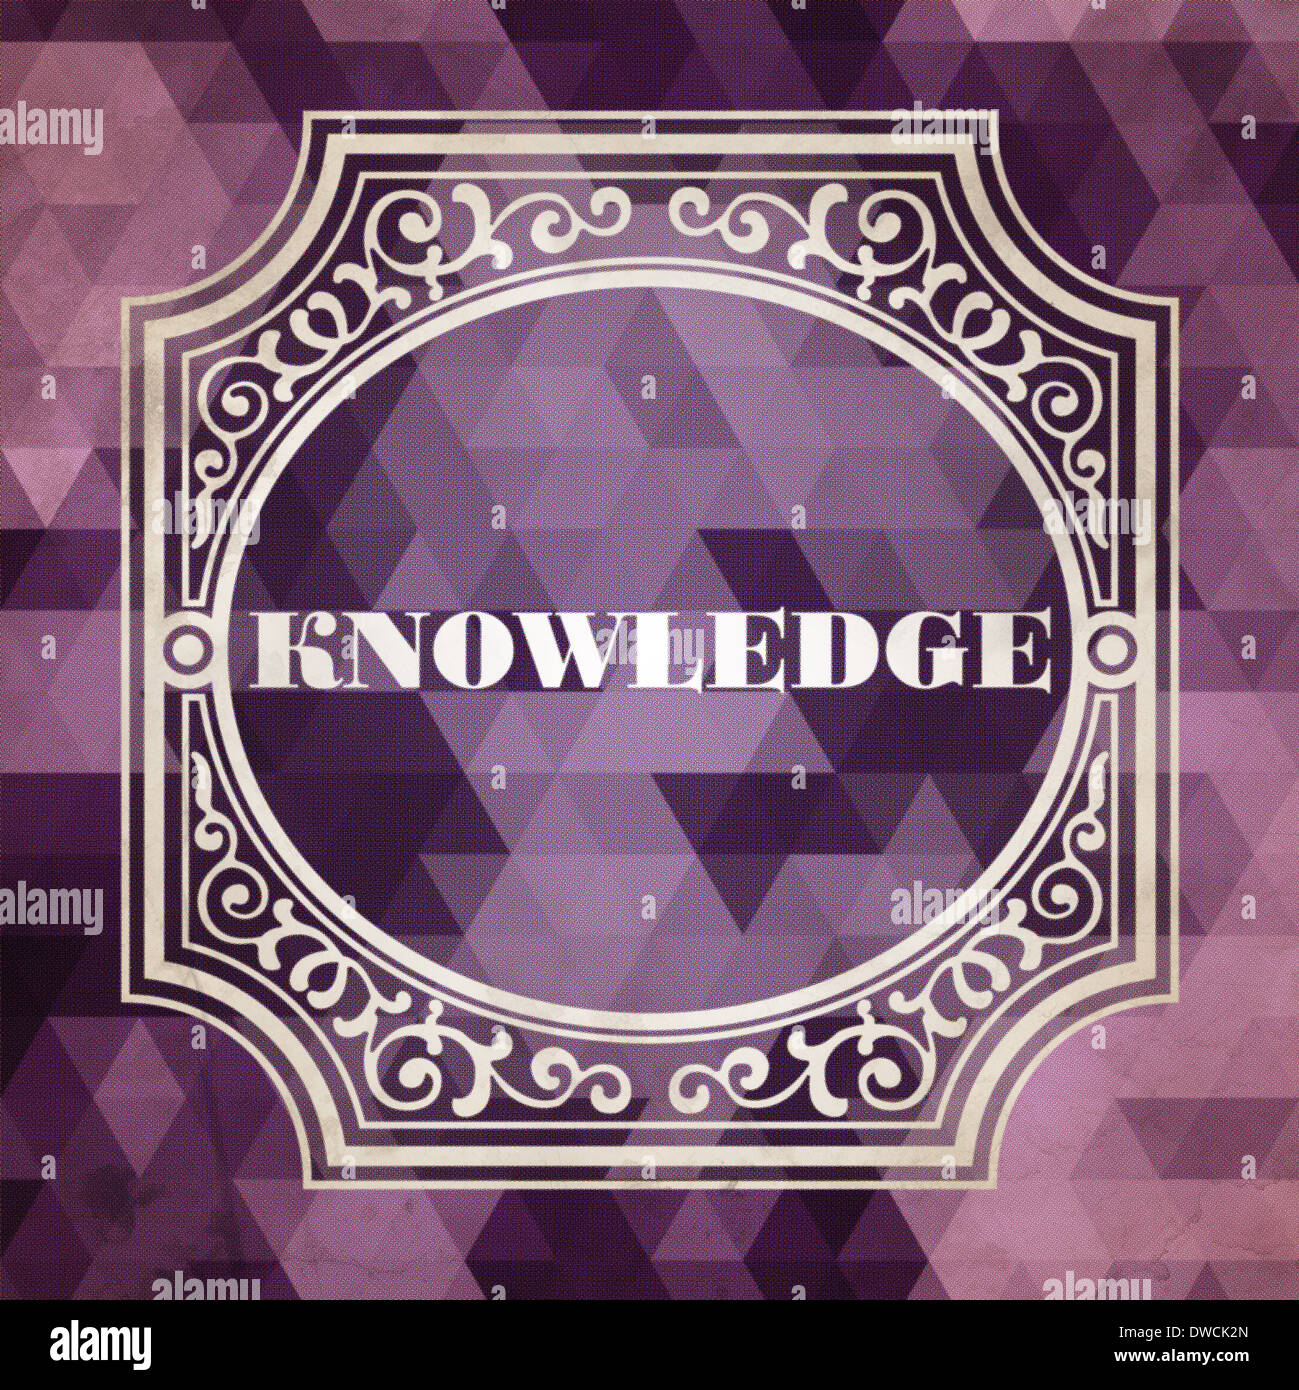 Knowledge Concept. Vintage Design Background. Stock Photo